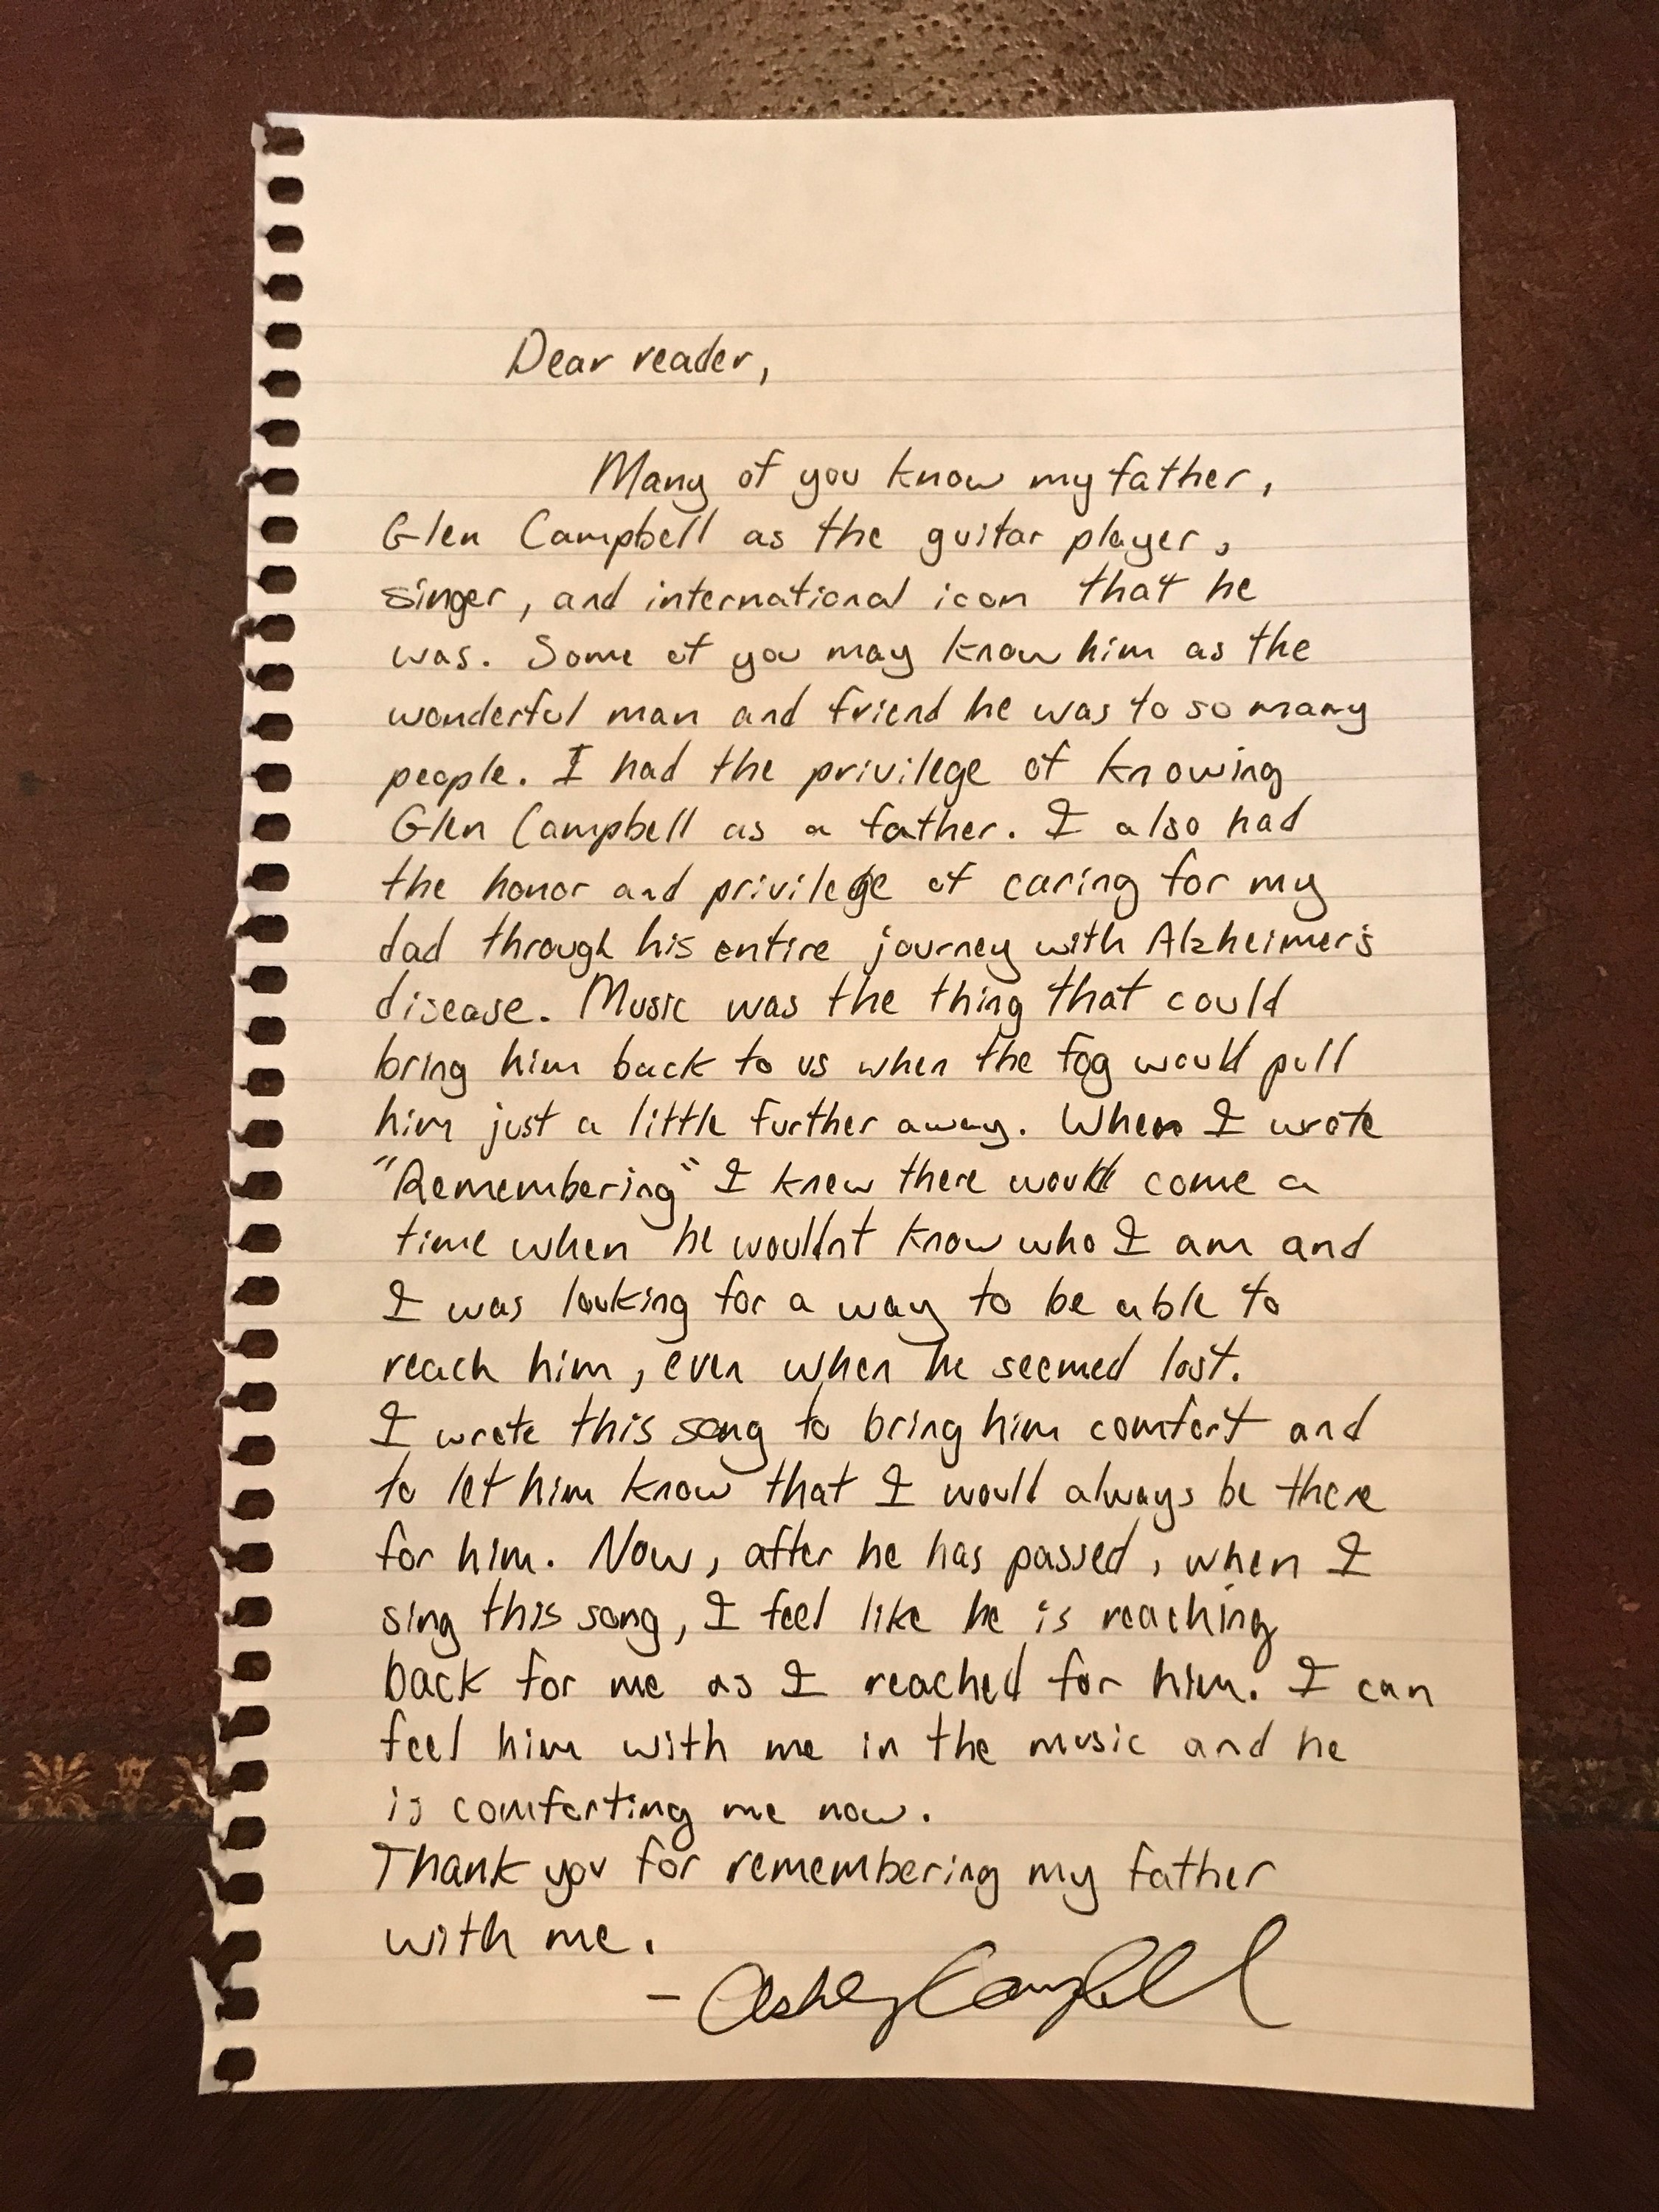 Ashley Campbell letter; Photo Courtesy of Ashley Campbell